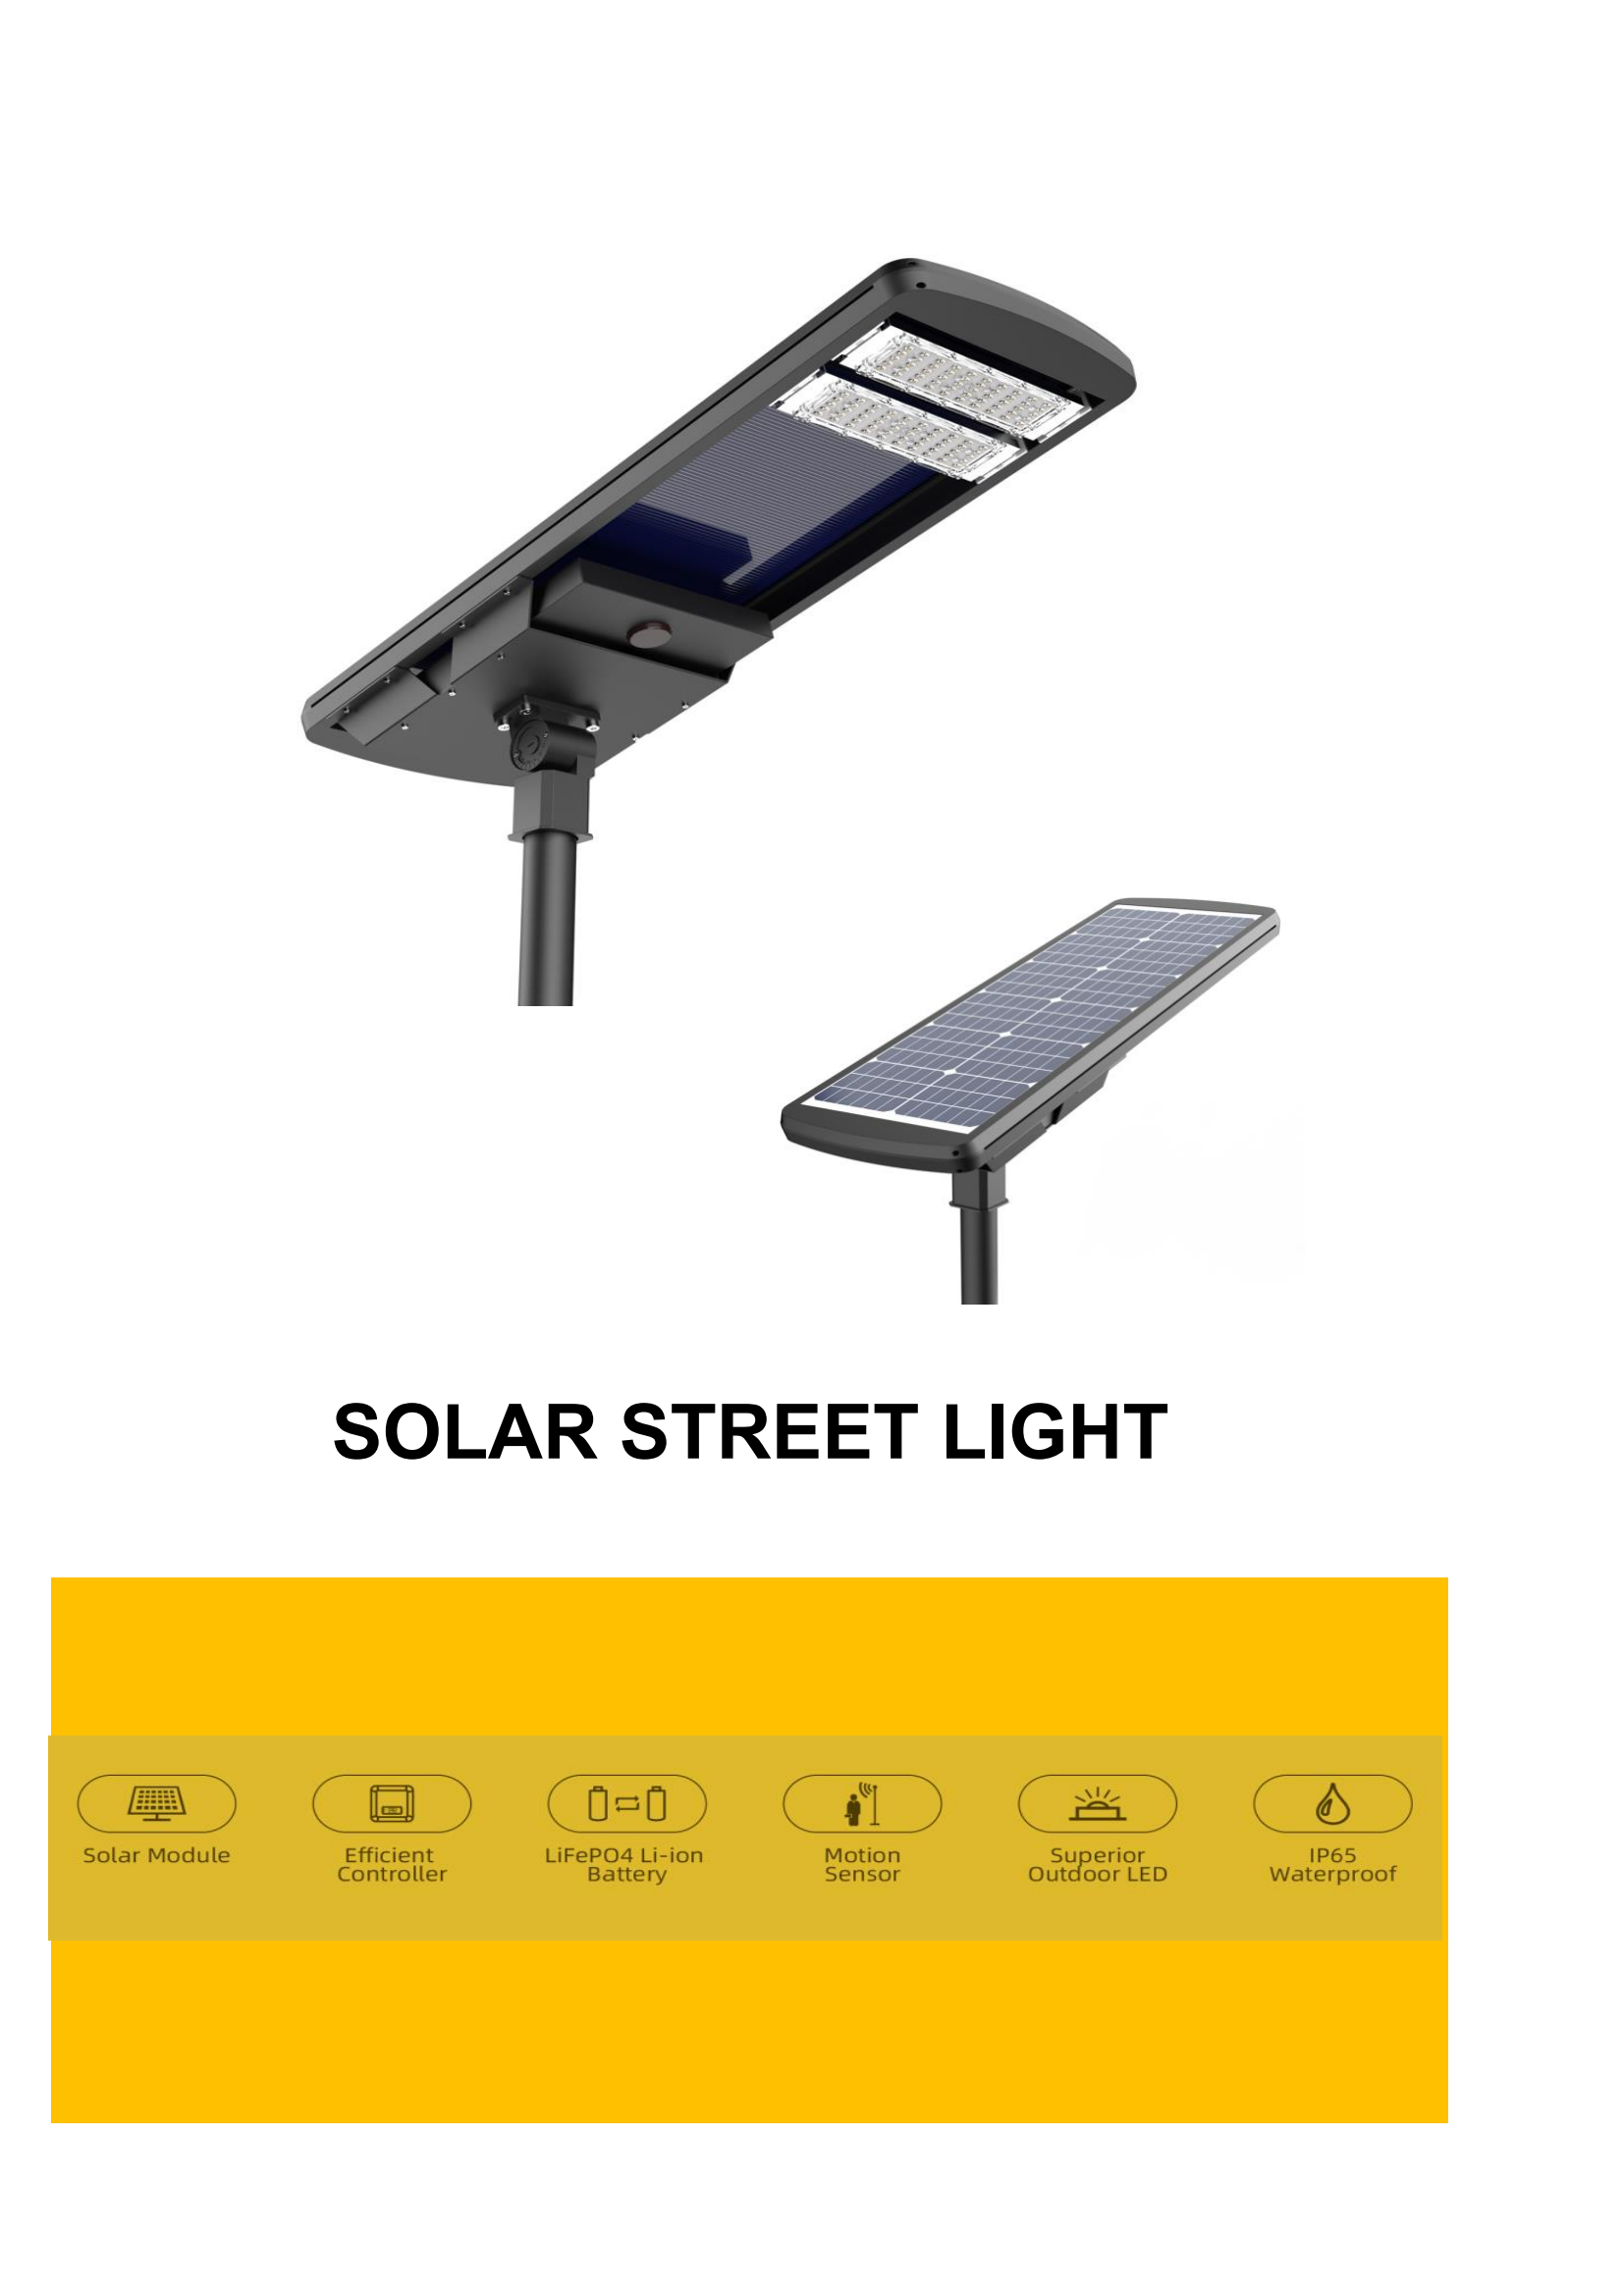 All in one solar street light